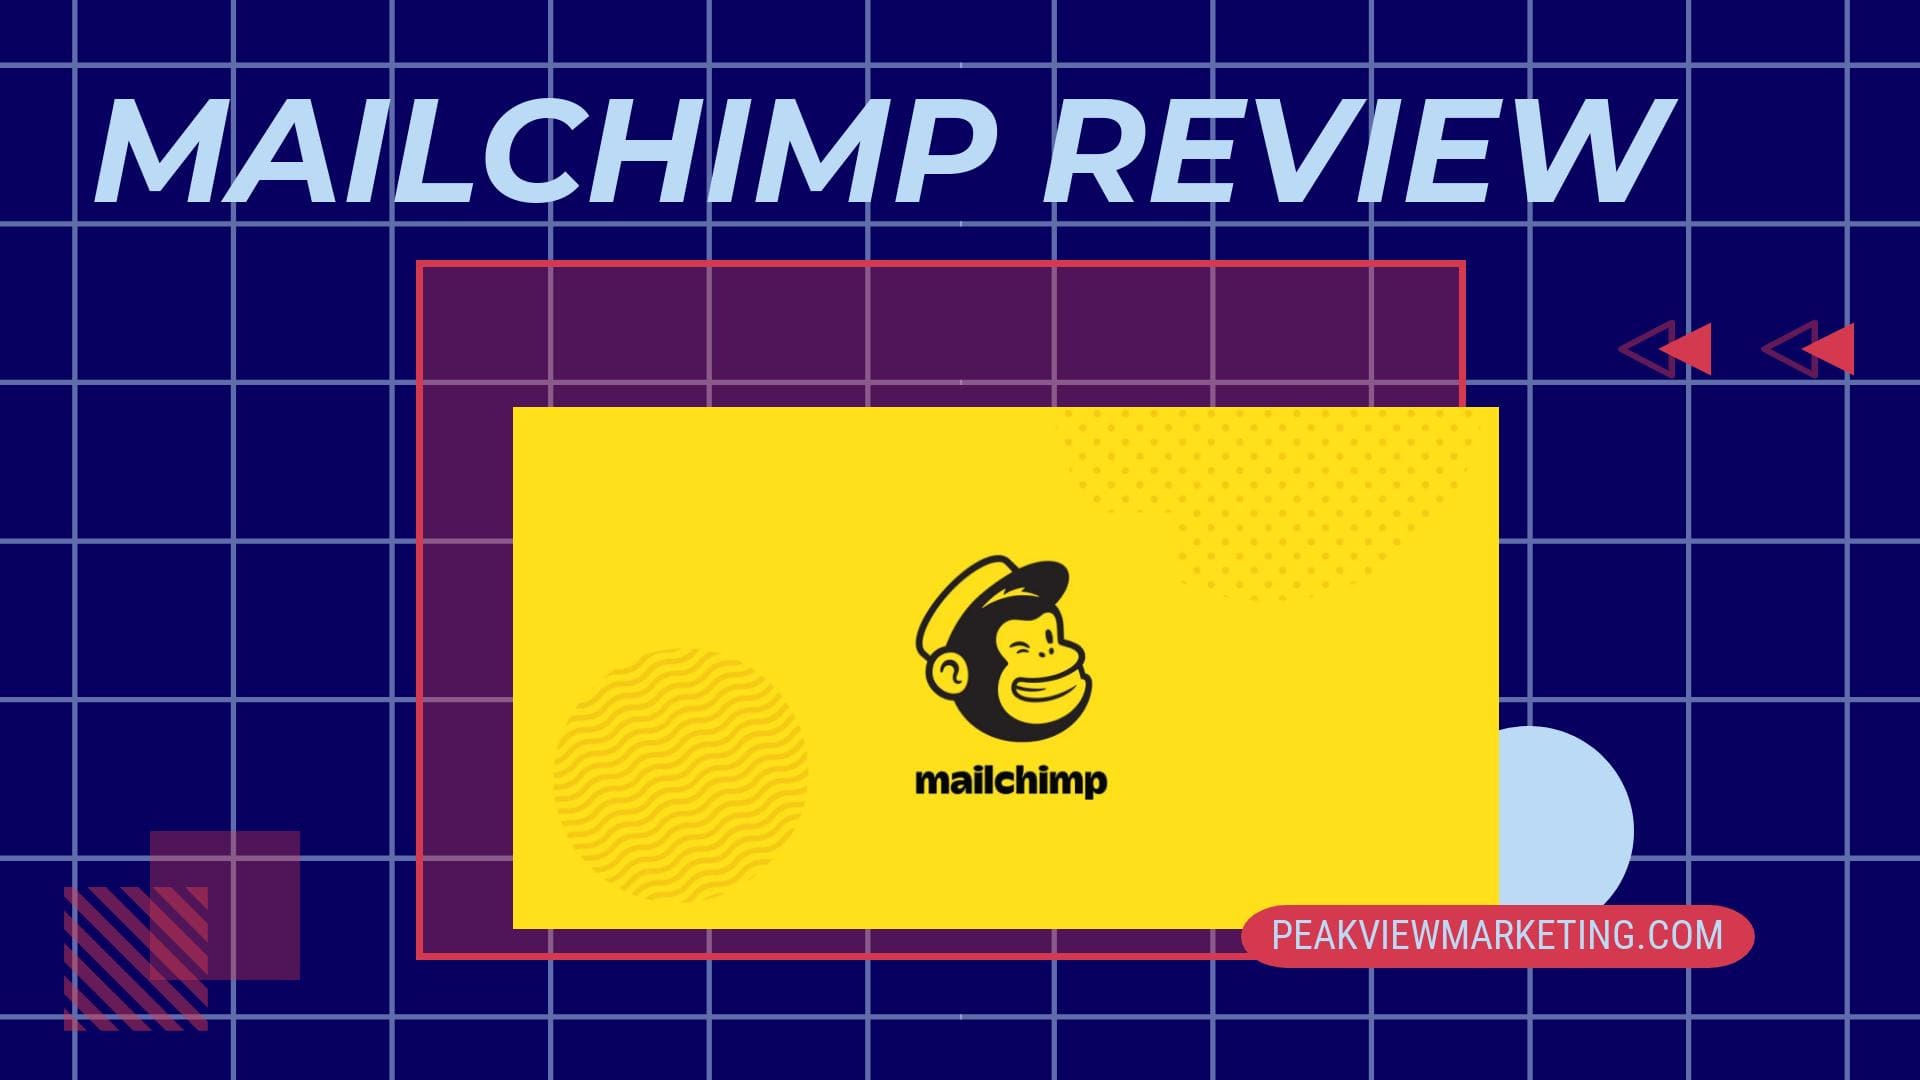 Mailchimp Review Image